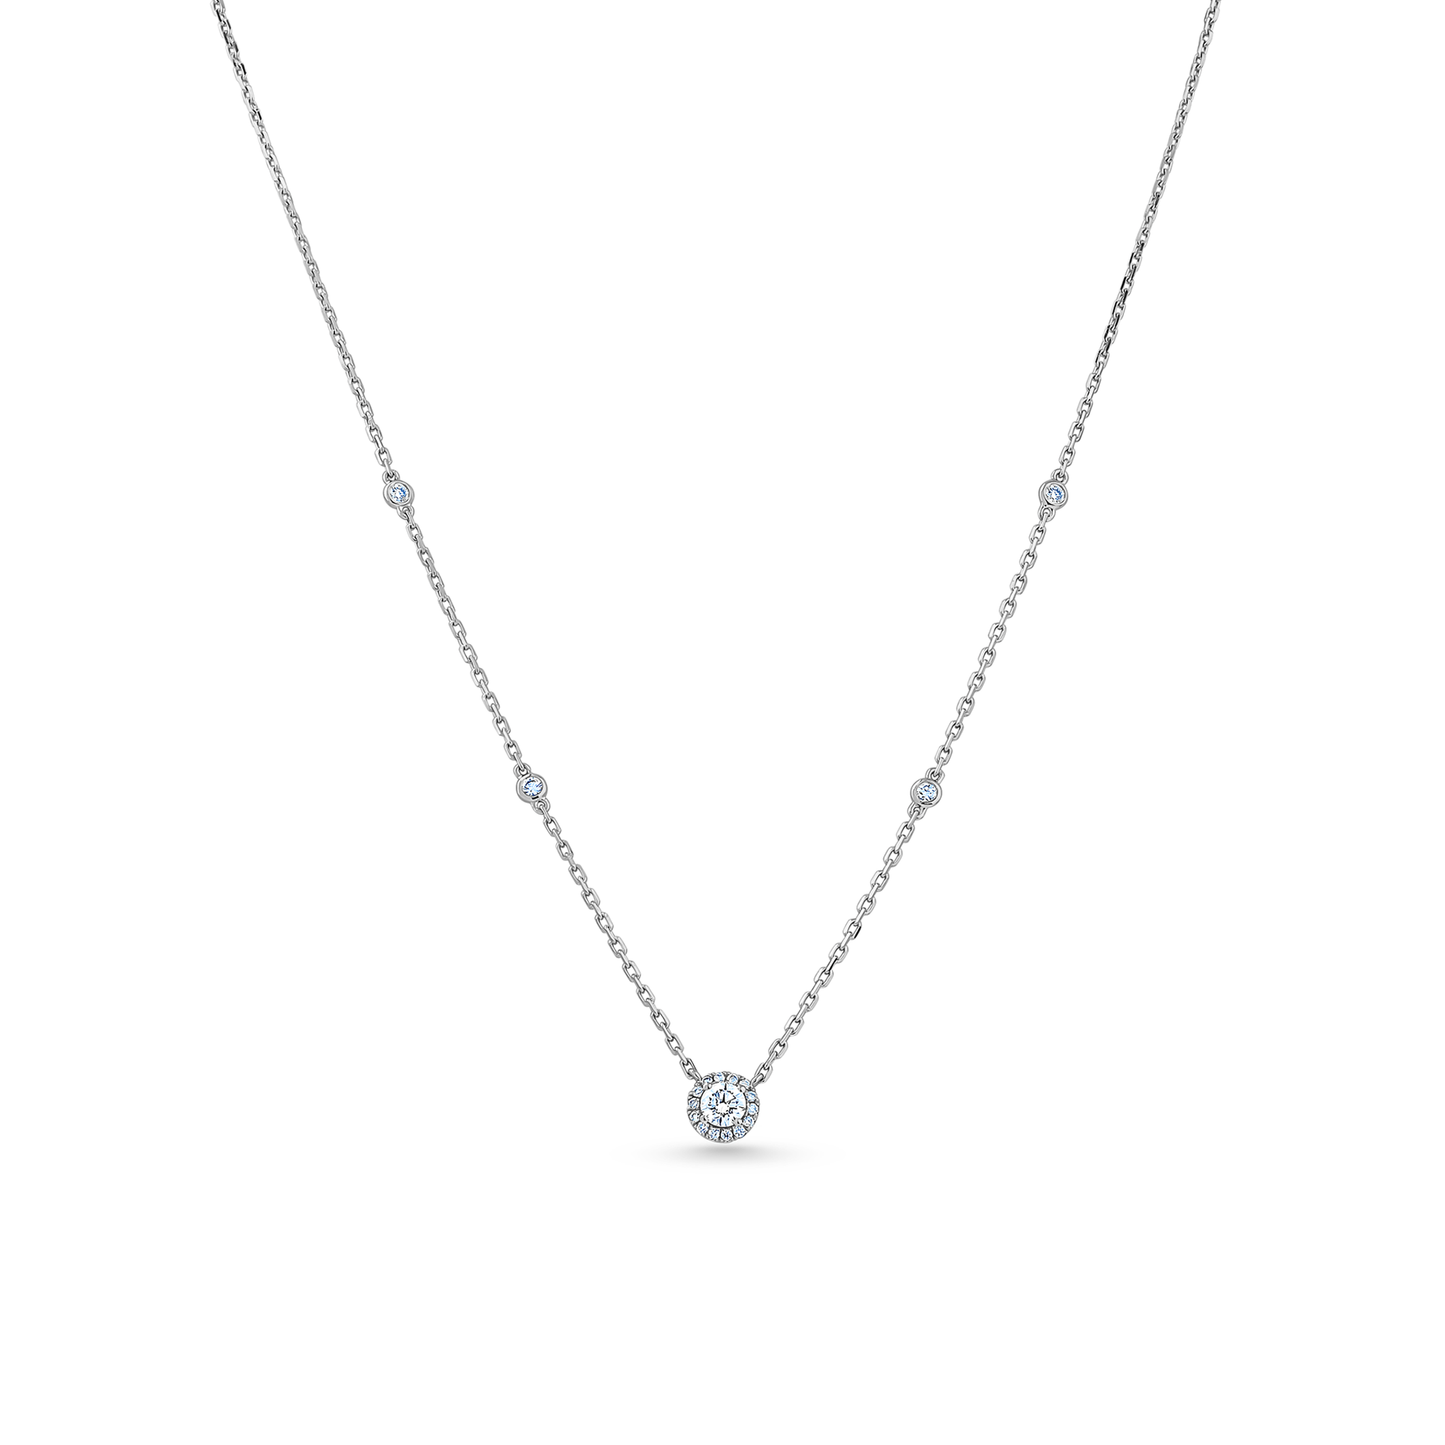 Oliver Heemeyer Liz diamond necklace 0.36 ct. made of 18k white gold.